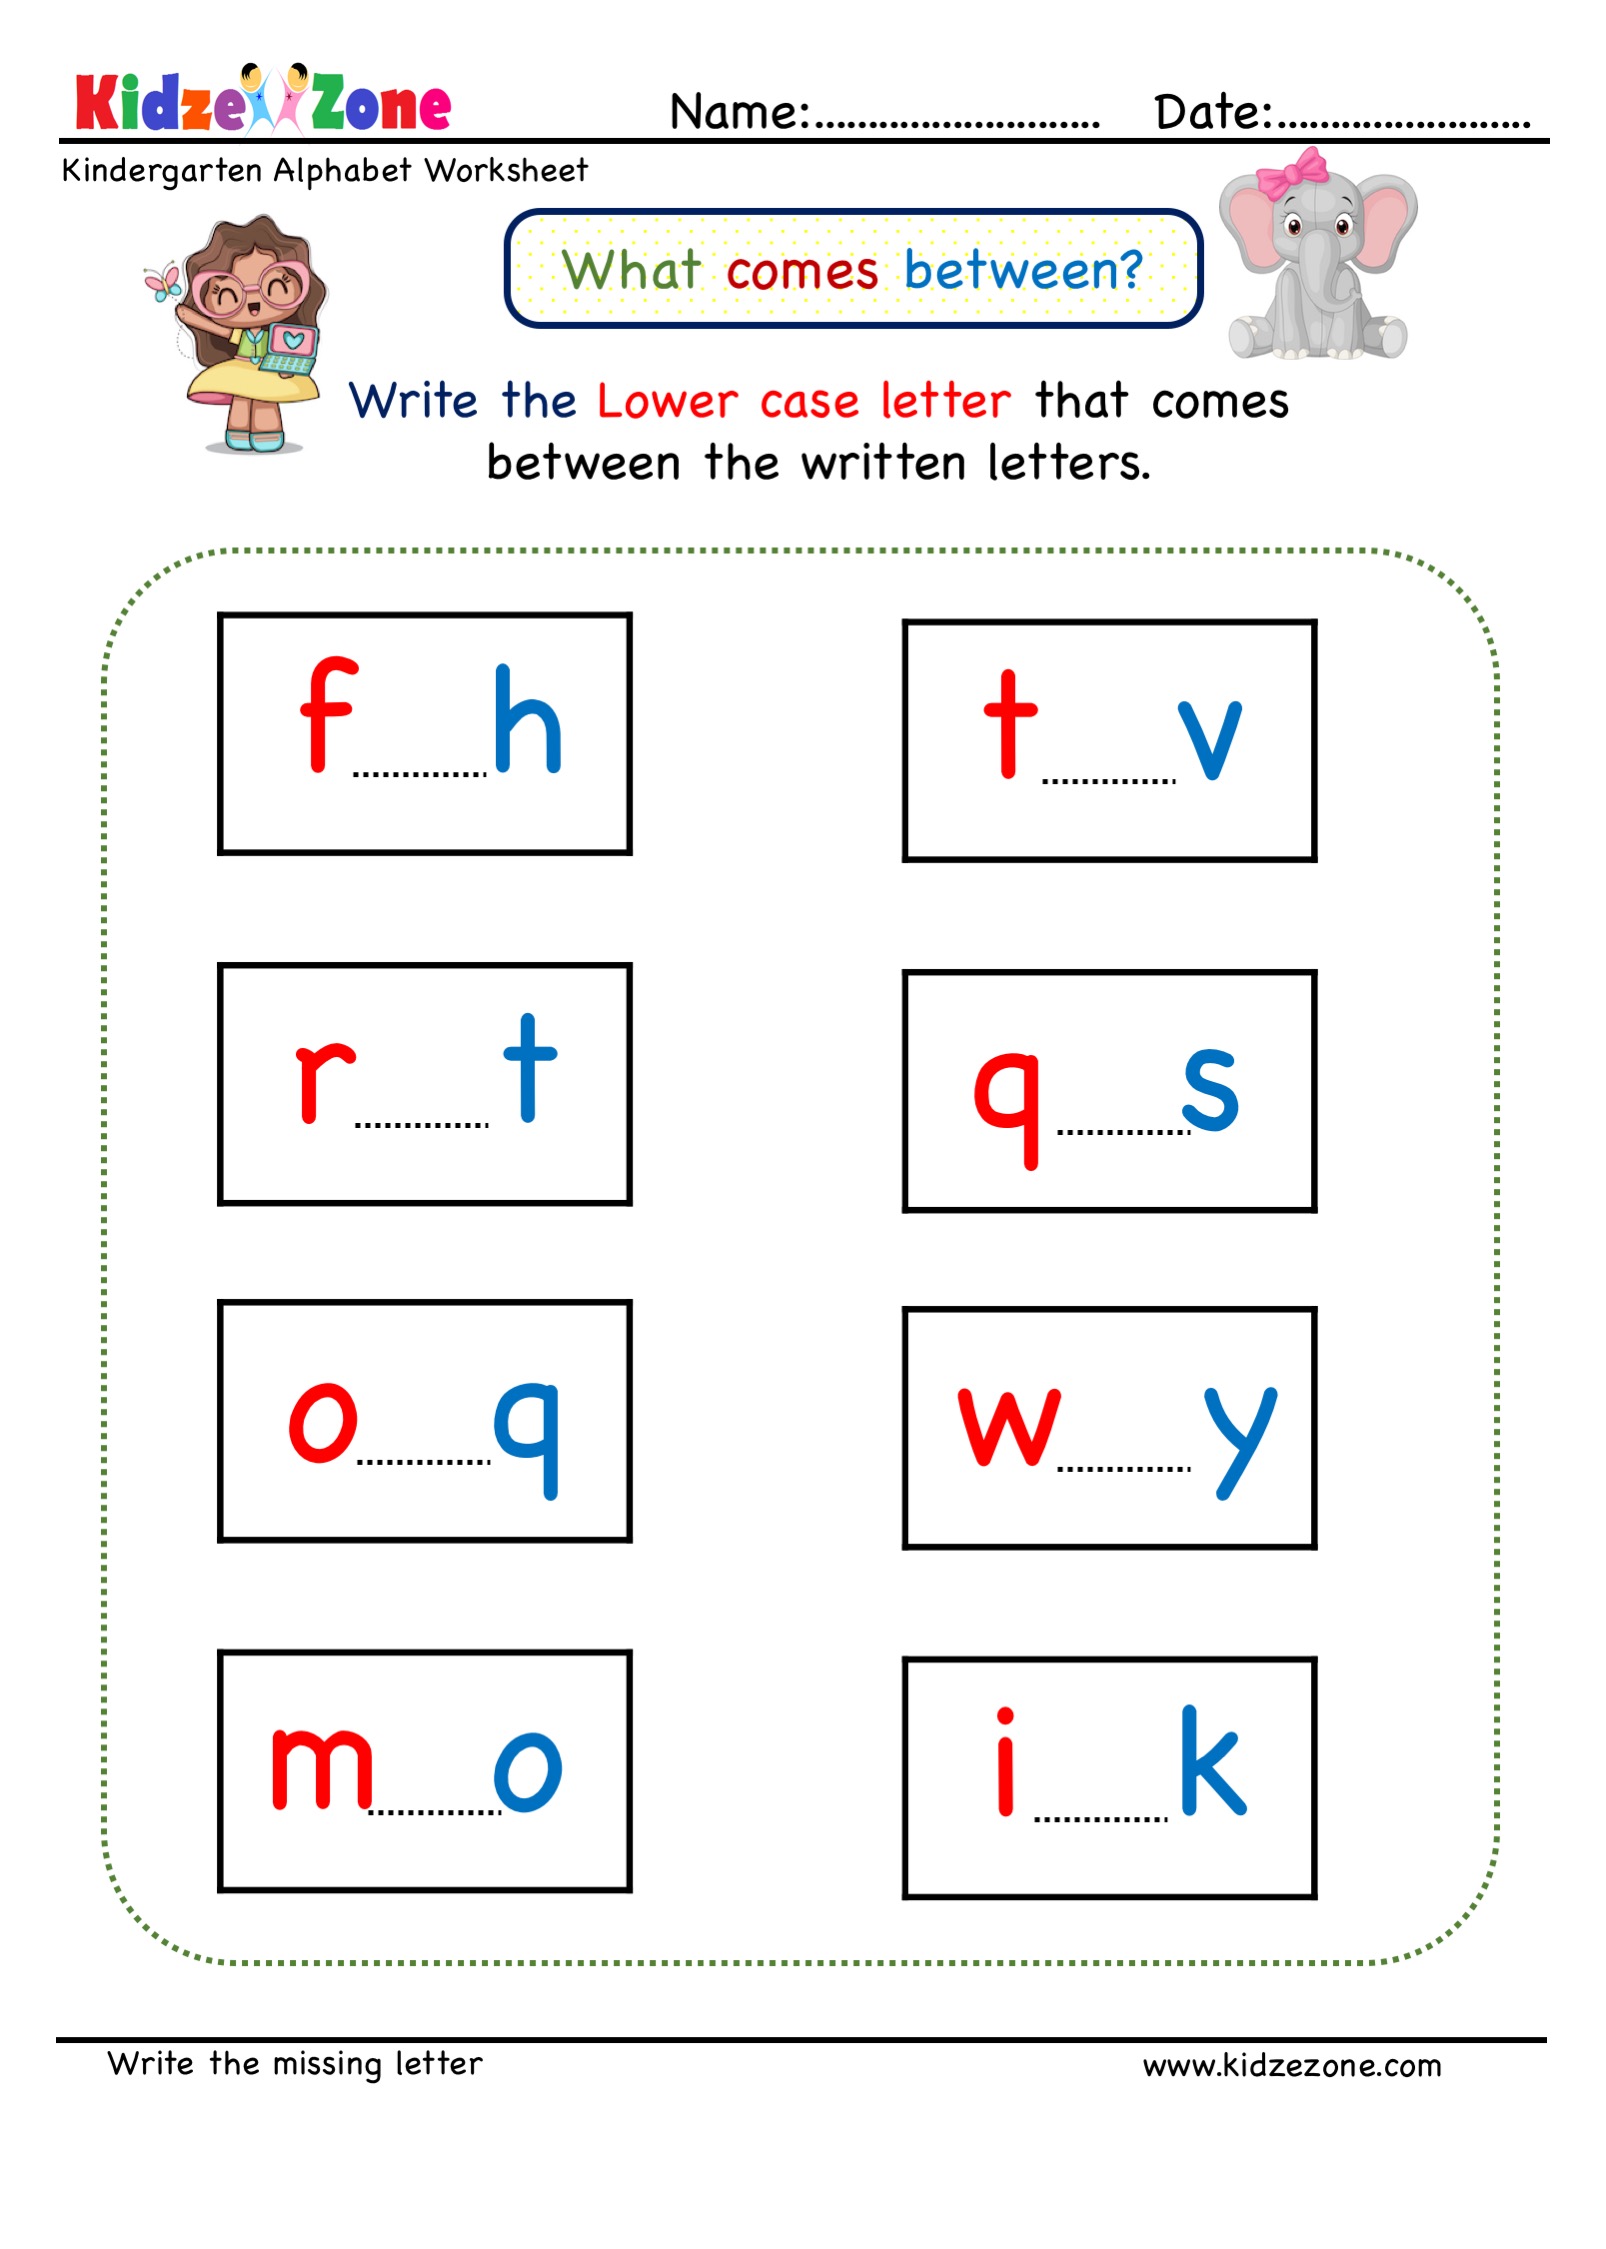 kindergarten-missing-letter-worksheet-missing-lower-case-in-between